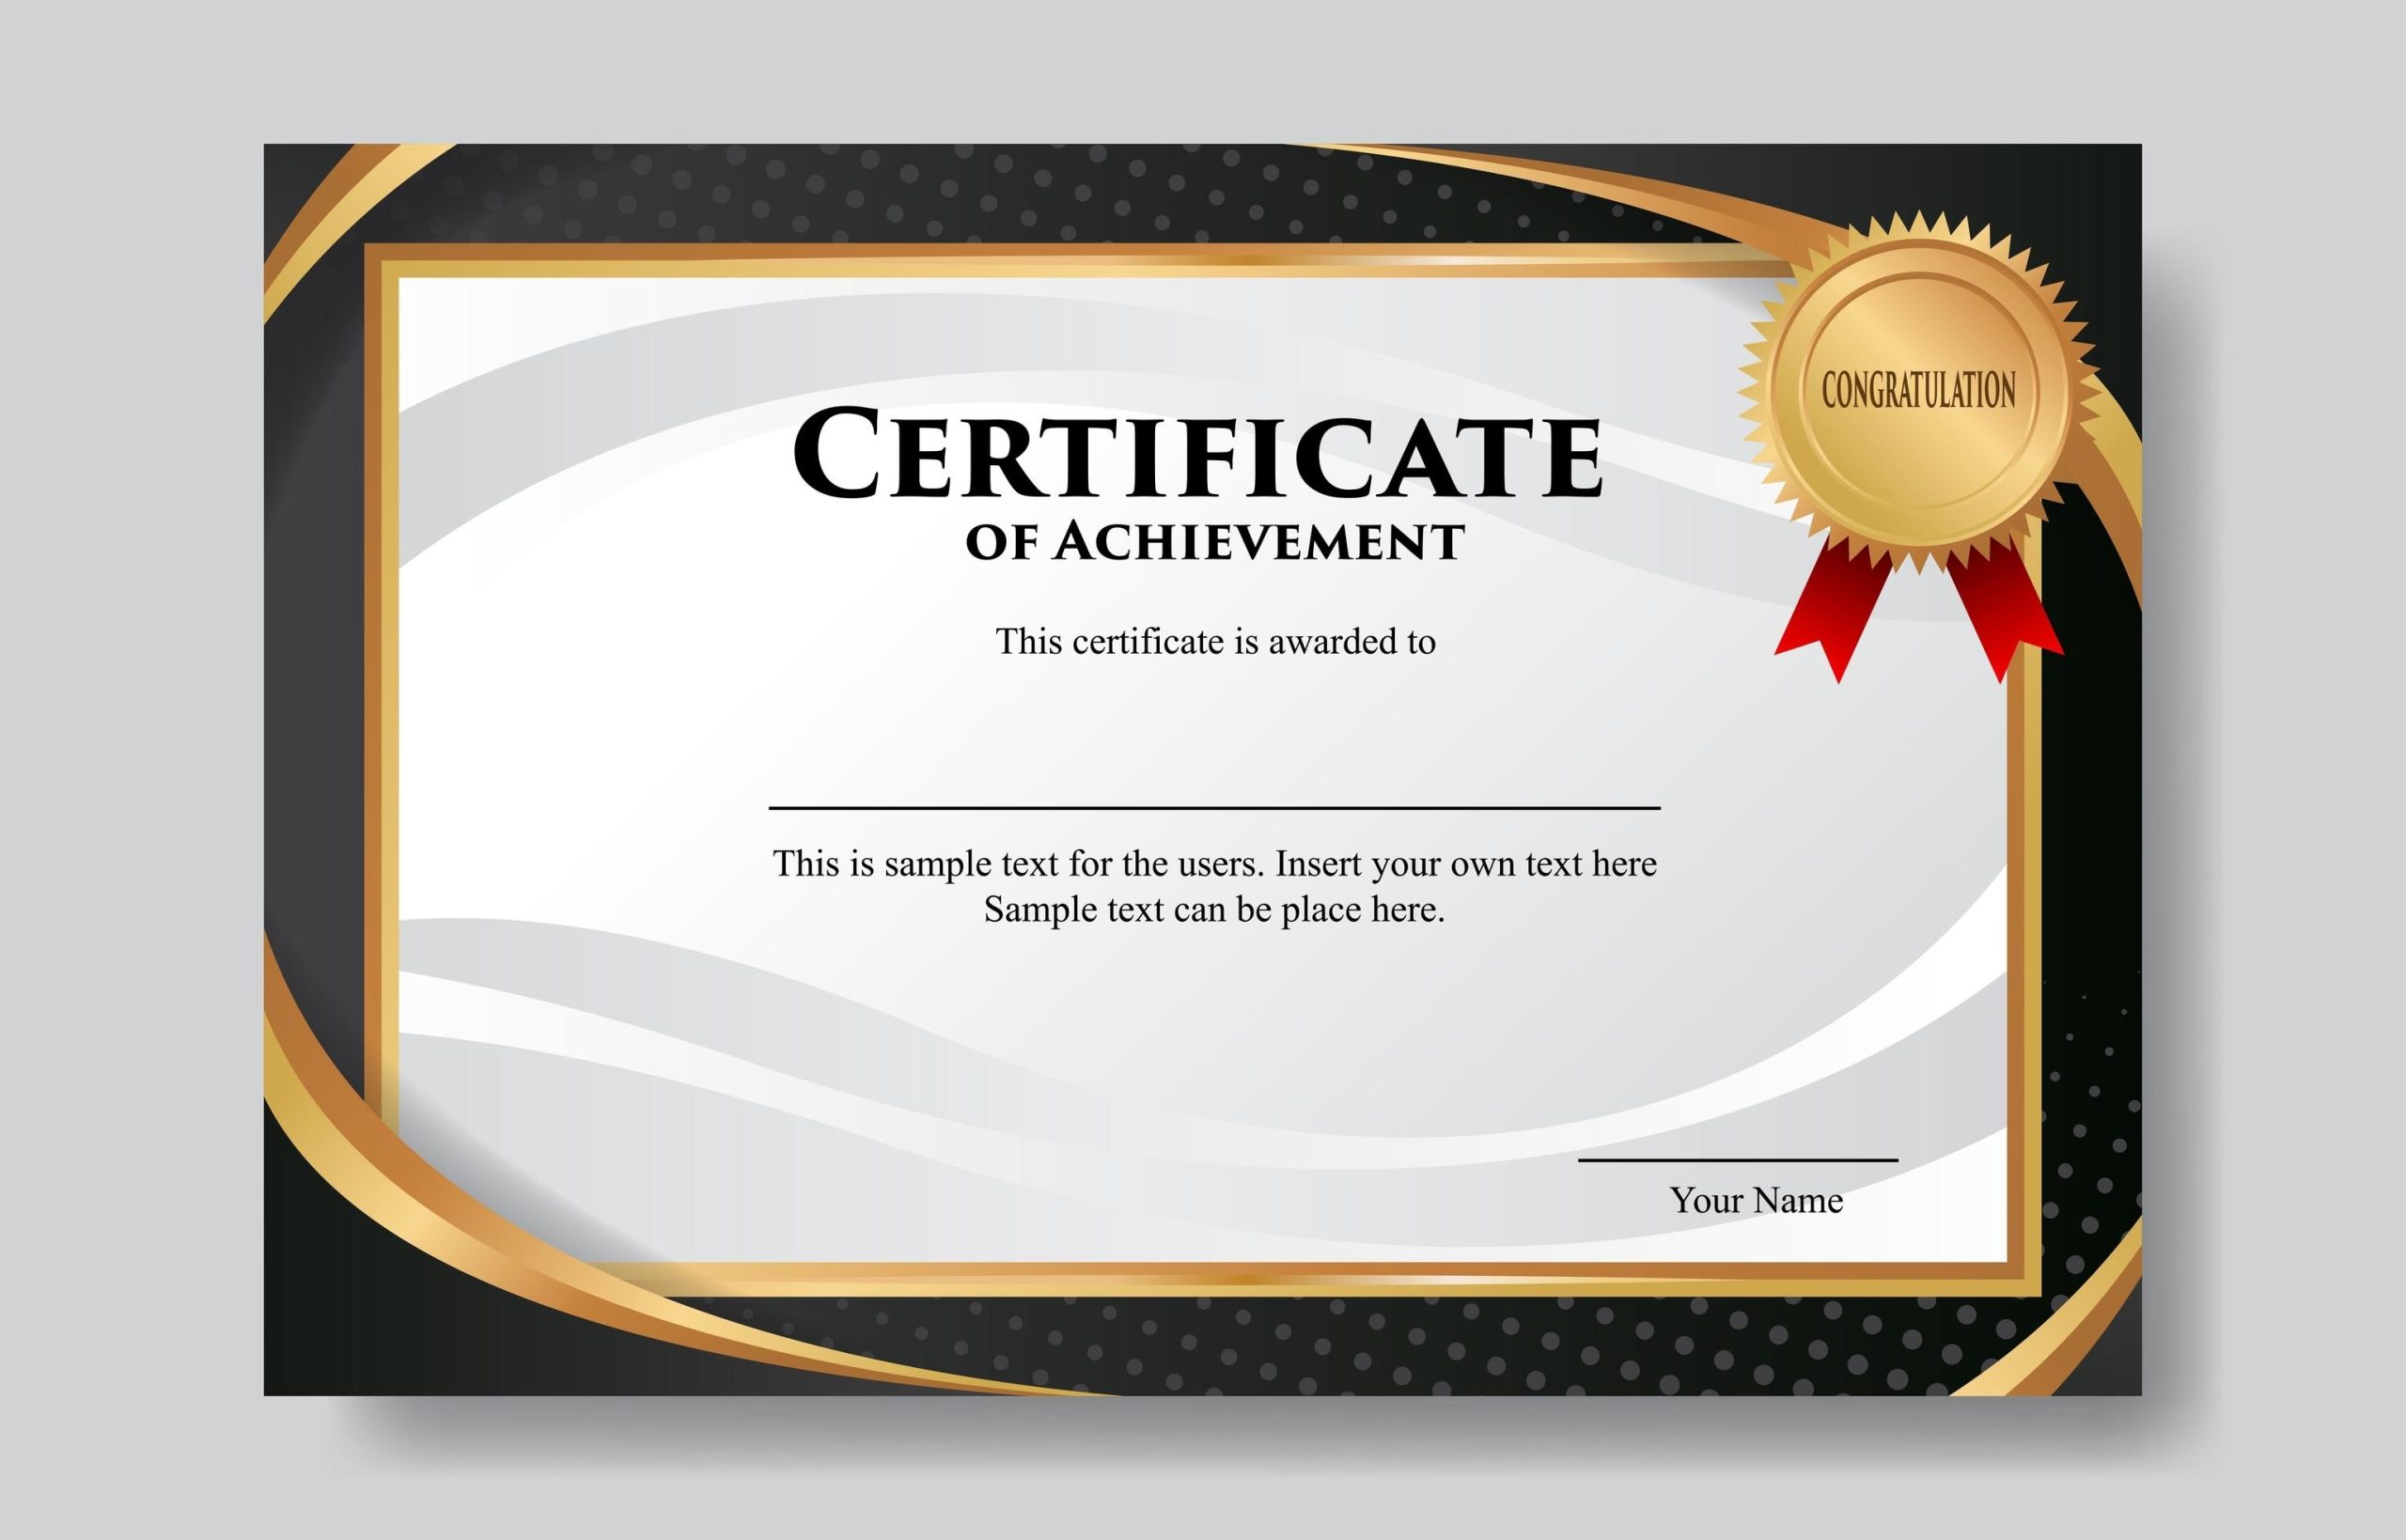 Black Gold Certificate Design Template 2195509 Vector Art At Vecteezy inside Design A Certificate Template